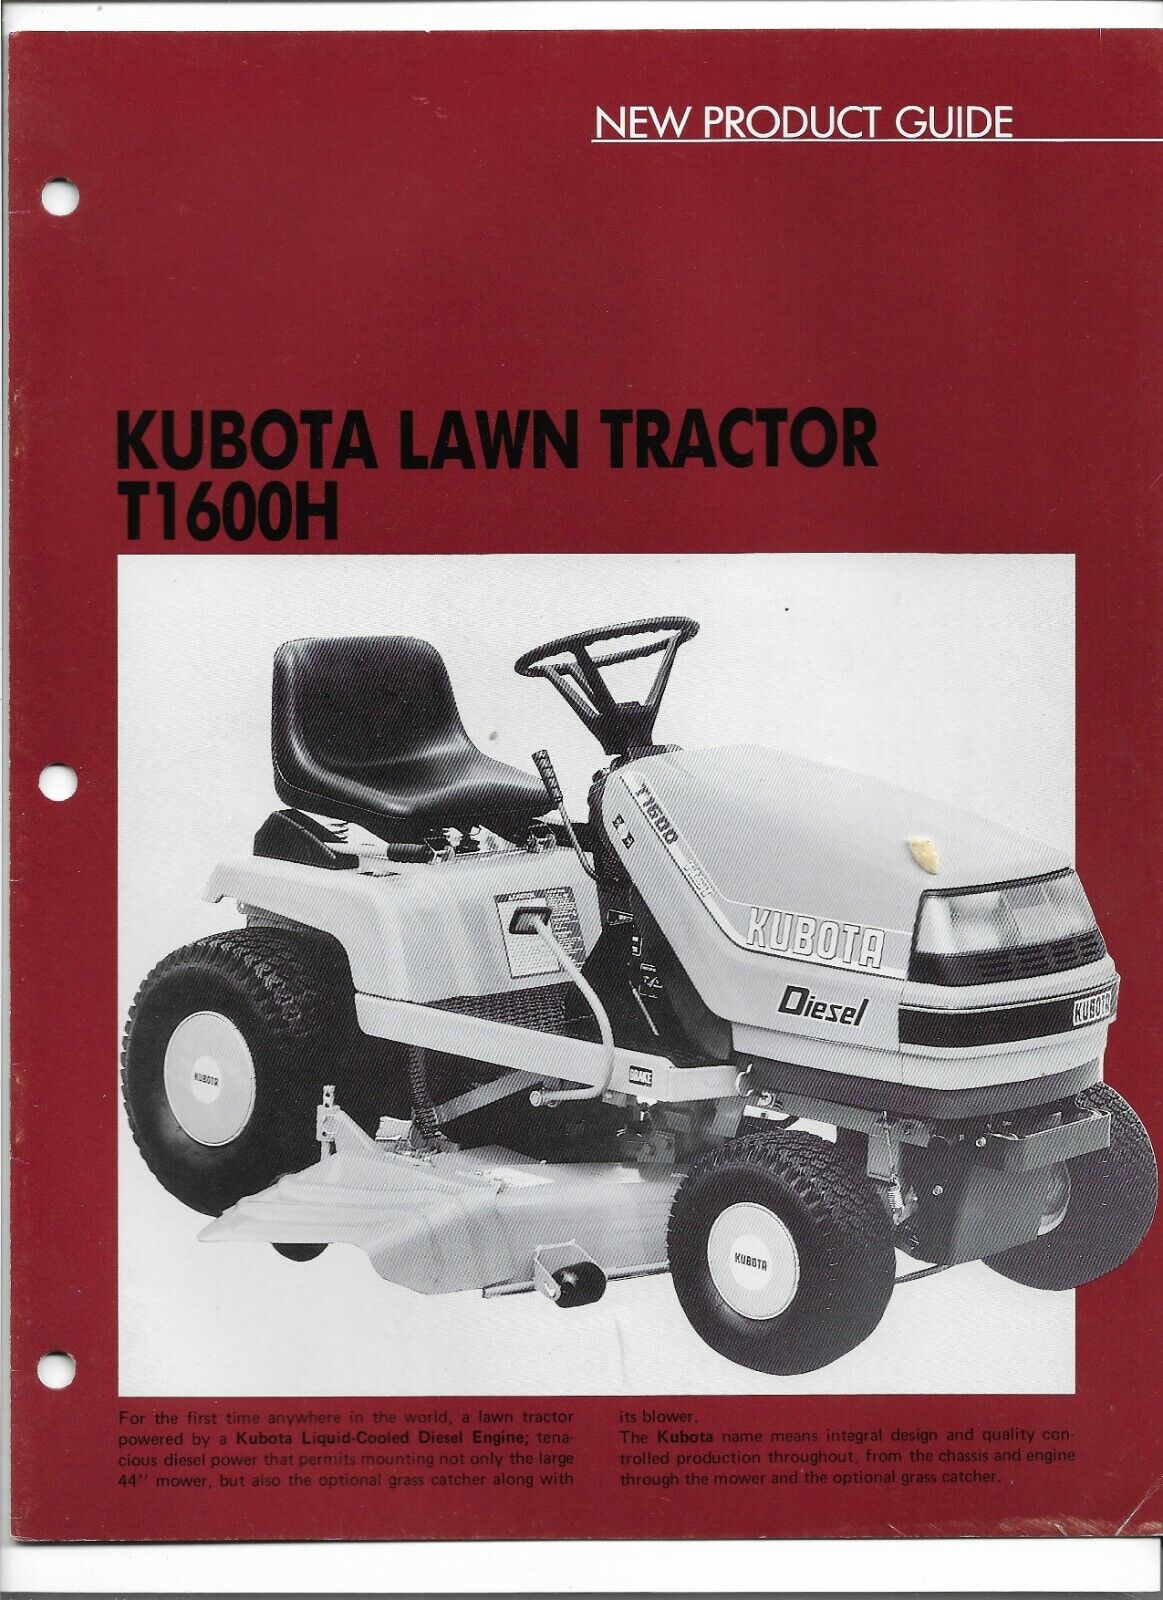 Original Kubota T1600H Lawn Tractor Sales Brochure New Product Guide 07909-61620